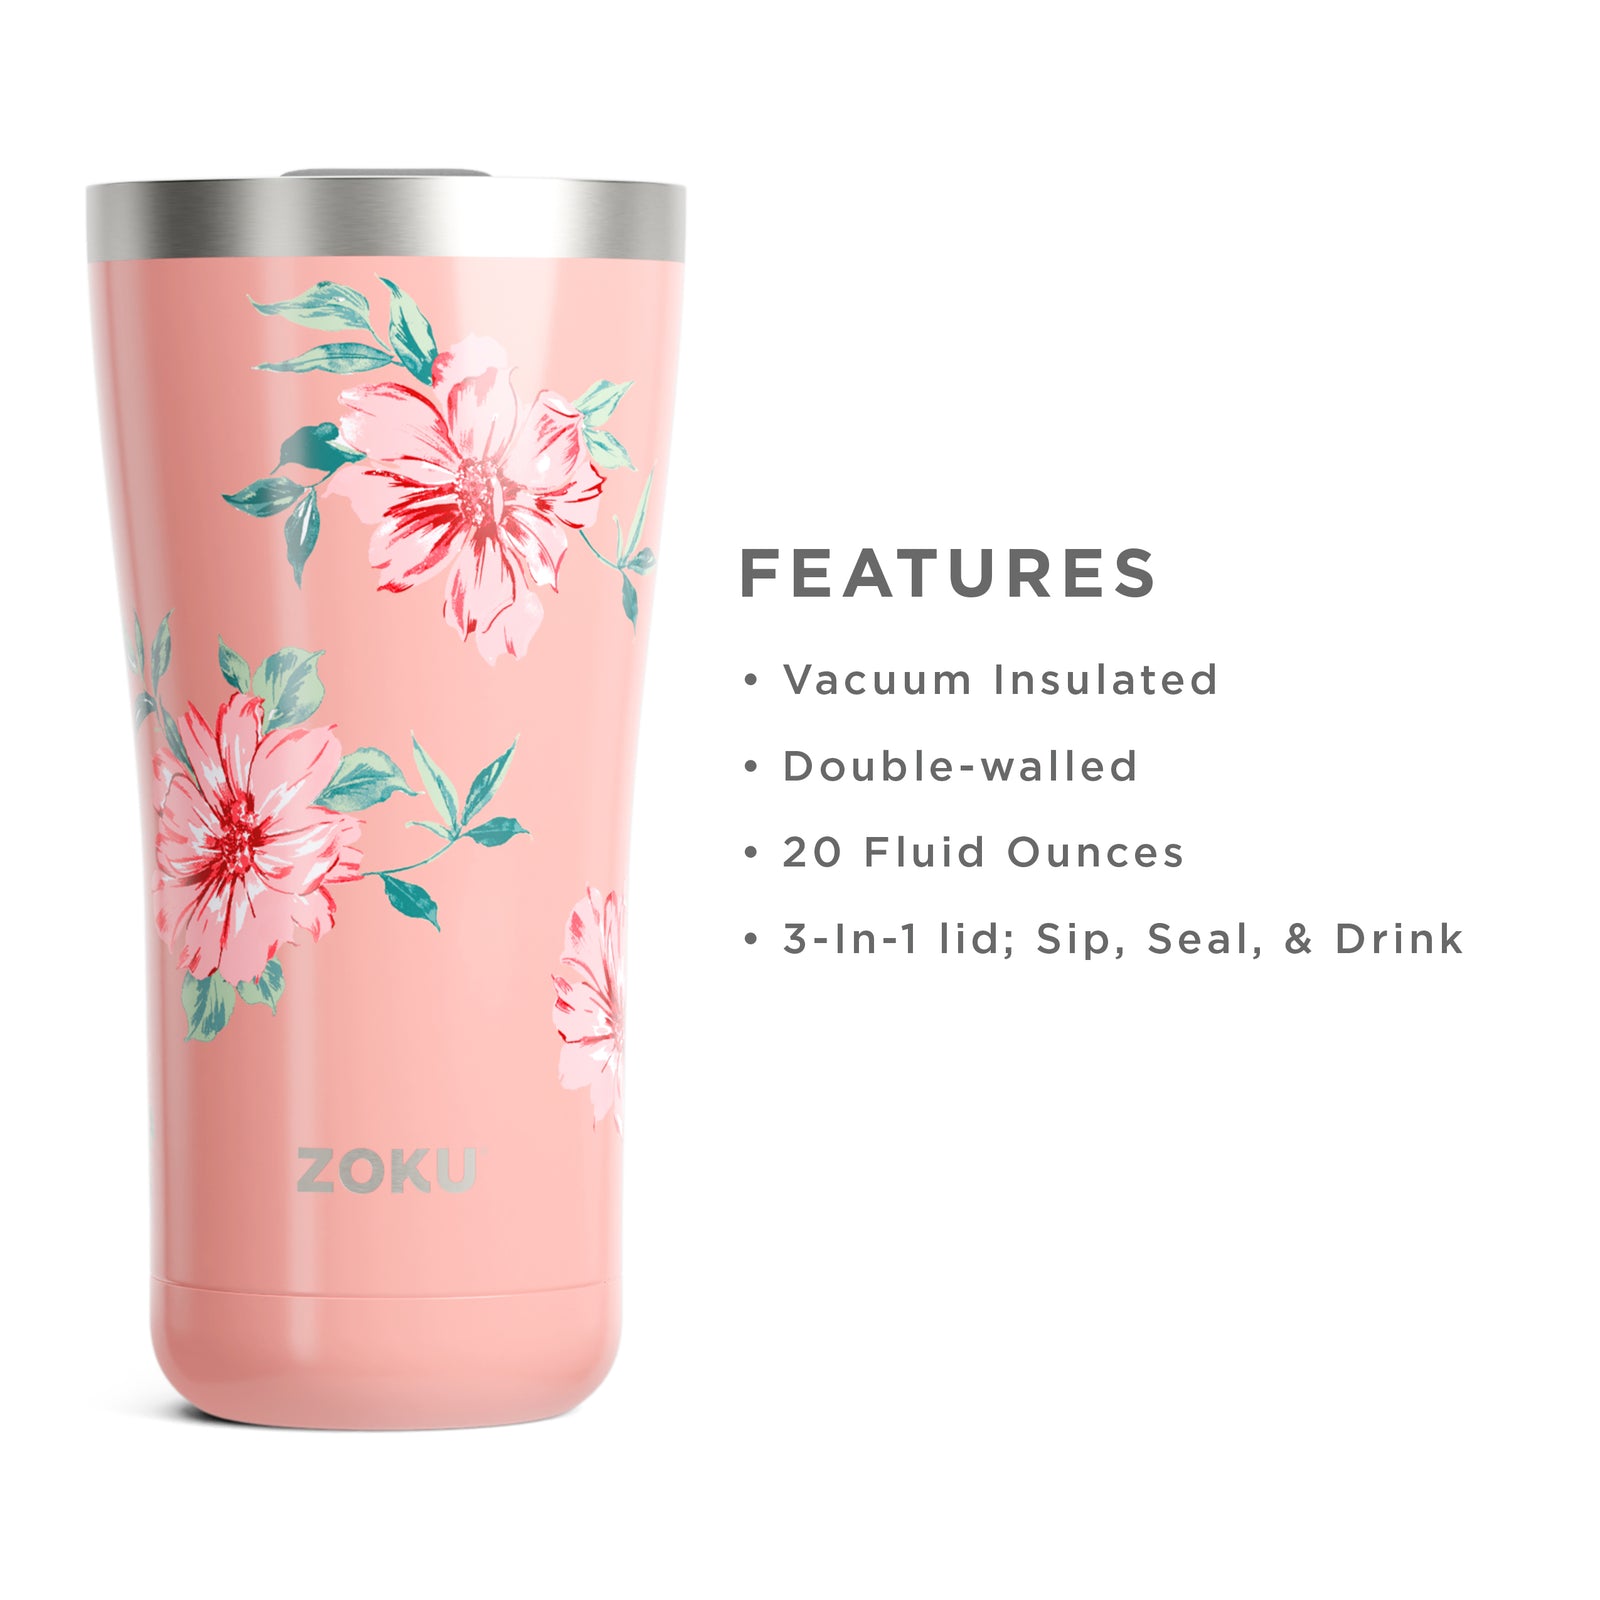 ZOKU Floral Collection